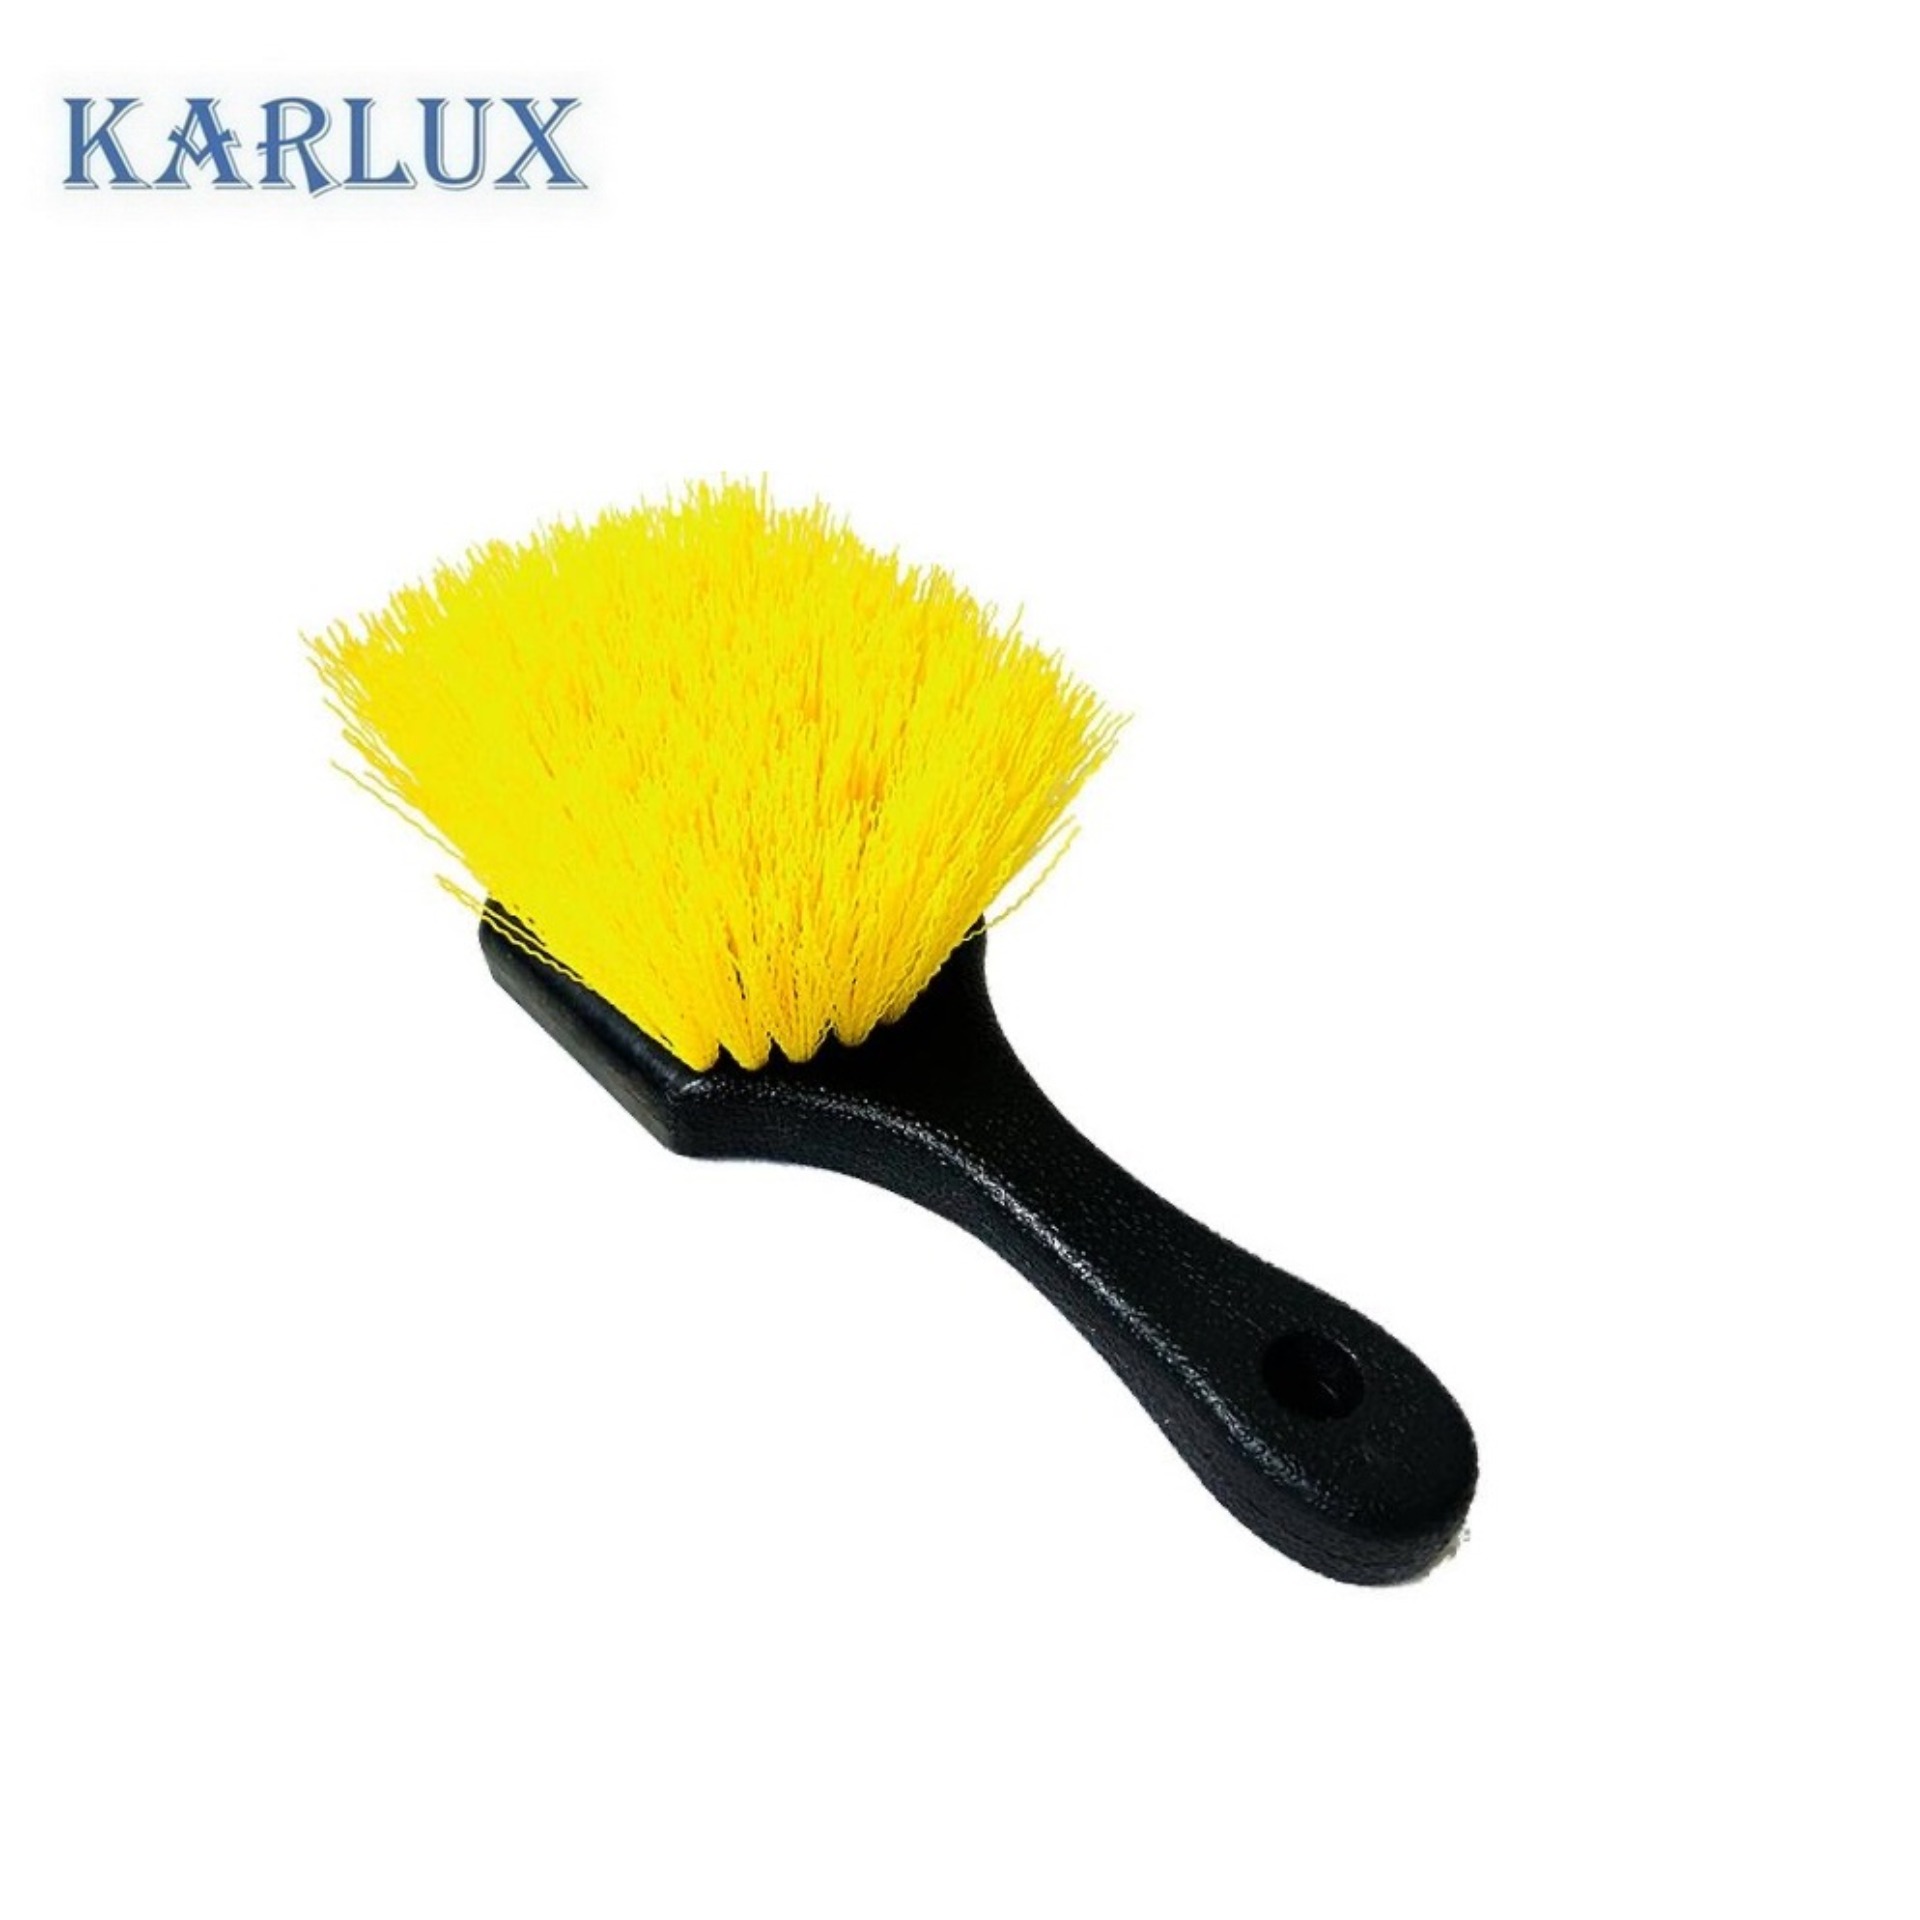 Karlux แปรงทำความสะอาดอเนกประสงค์ สีเหลือง ยางรถยนต์ ขัดล้อ Utiity Brush